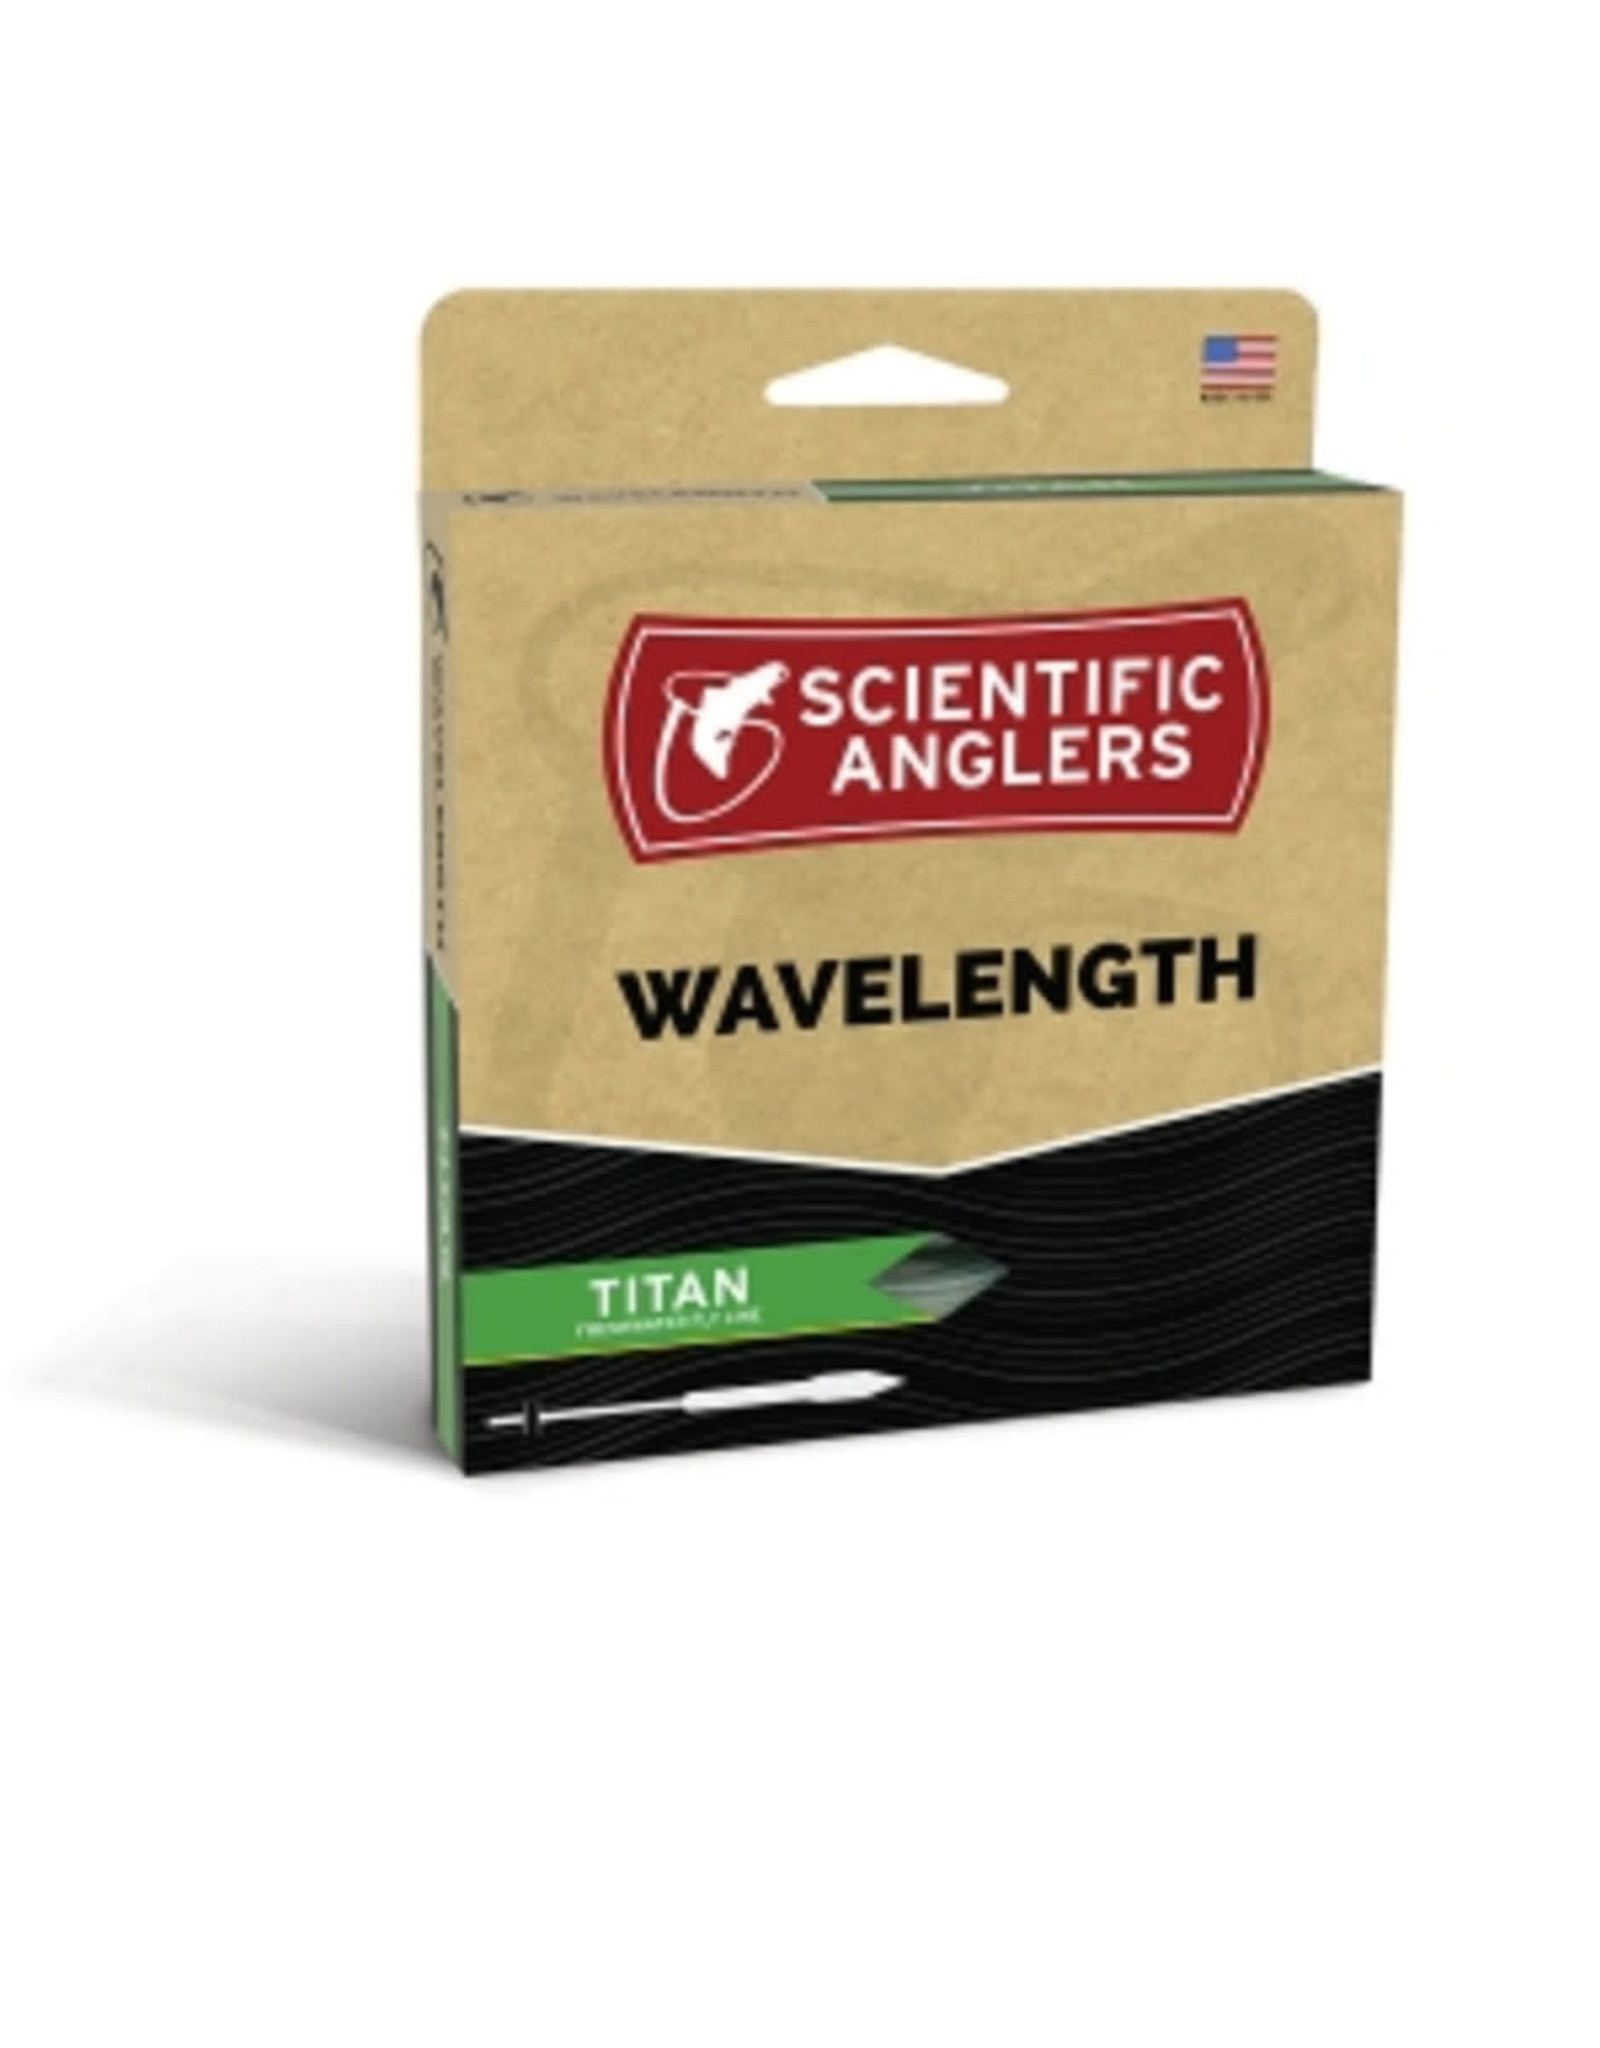 Scientific Anglers Scientific Anglers Wavelength Titan